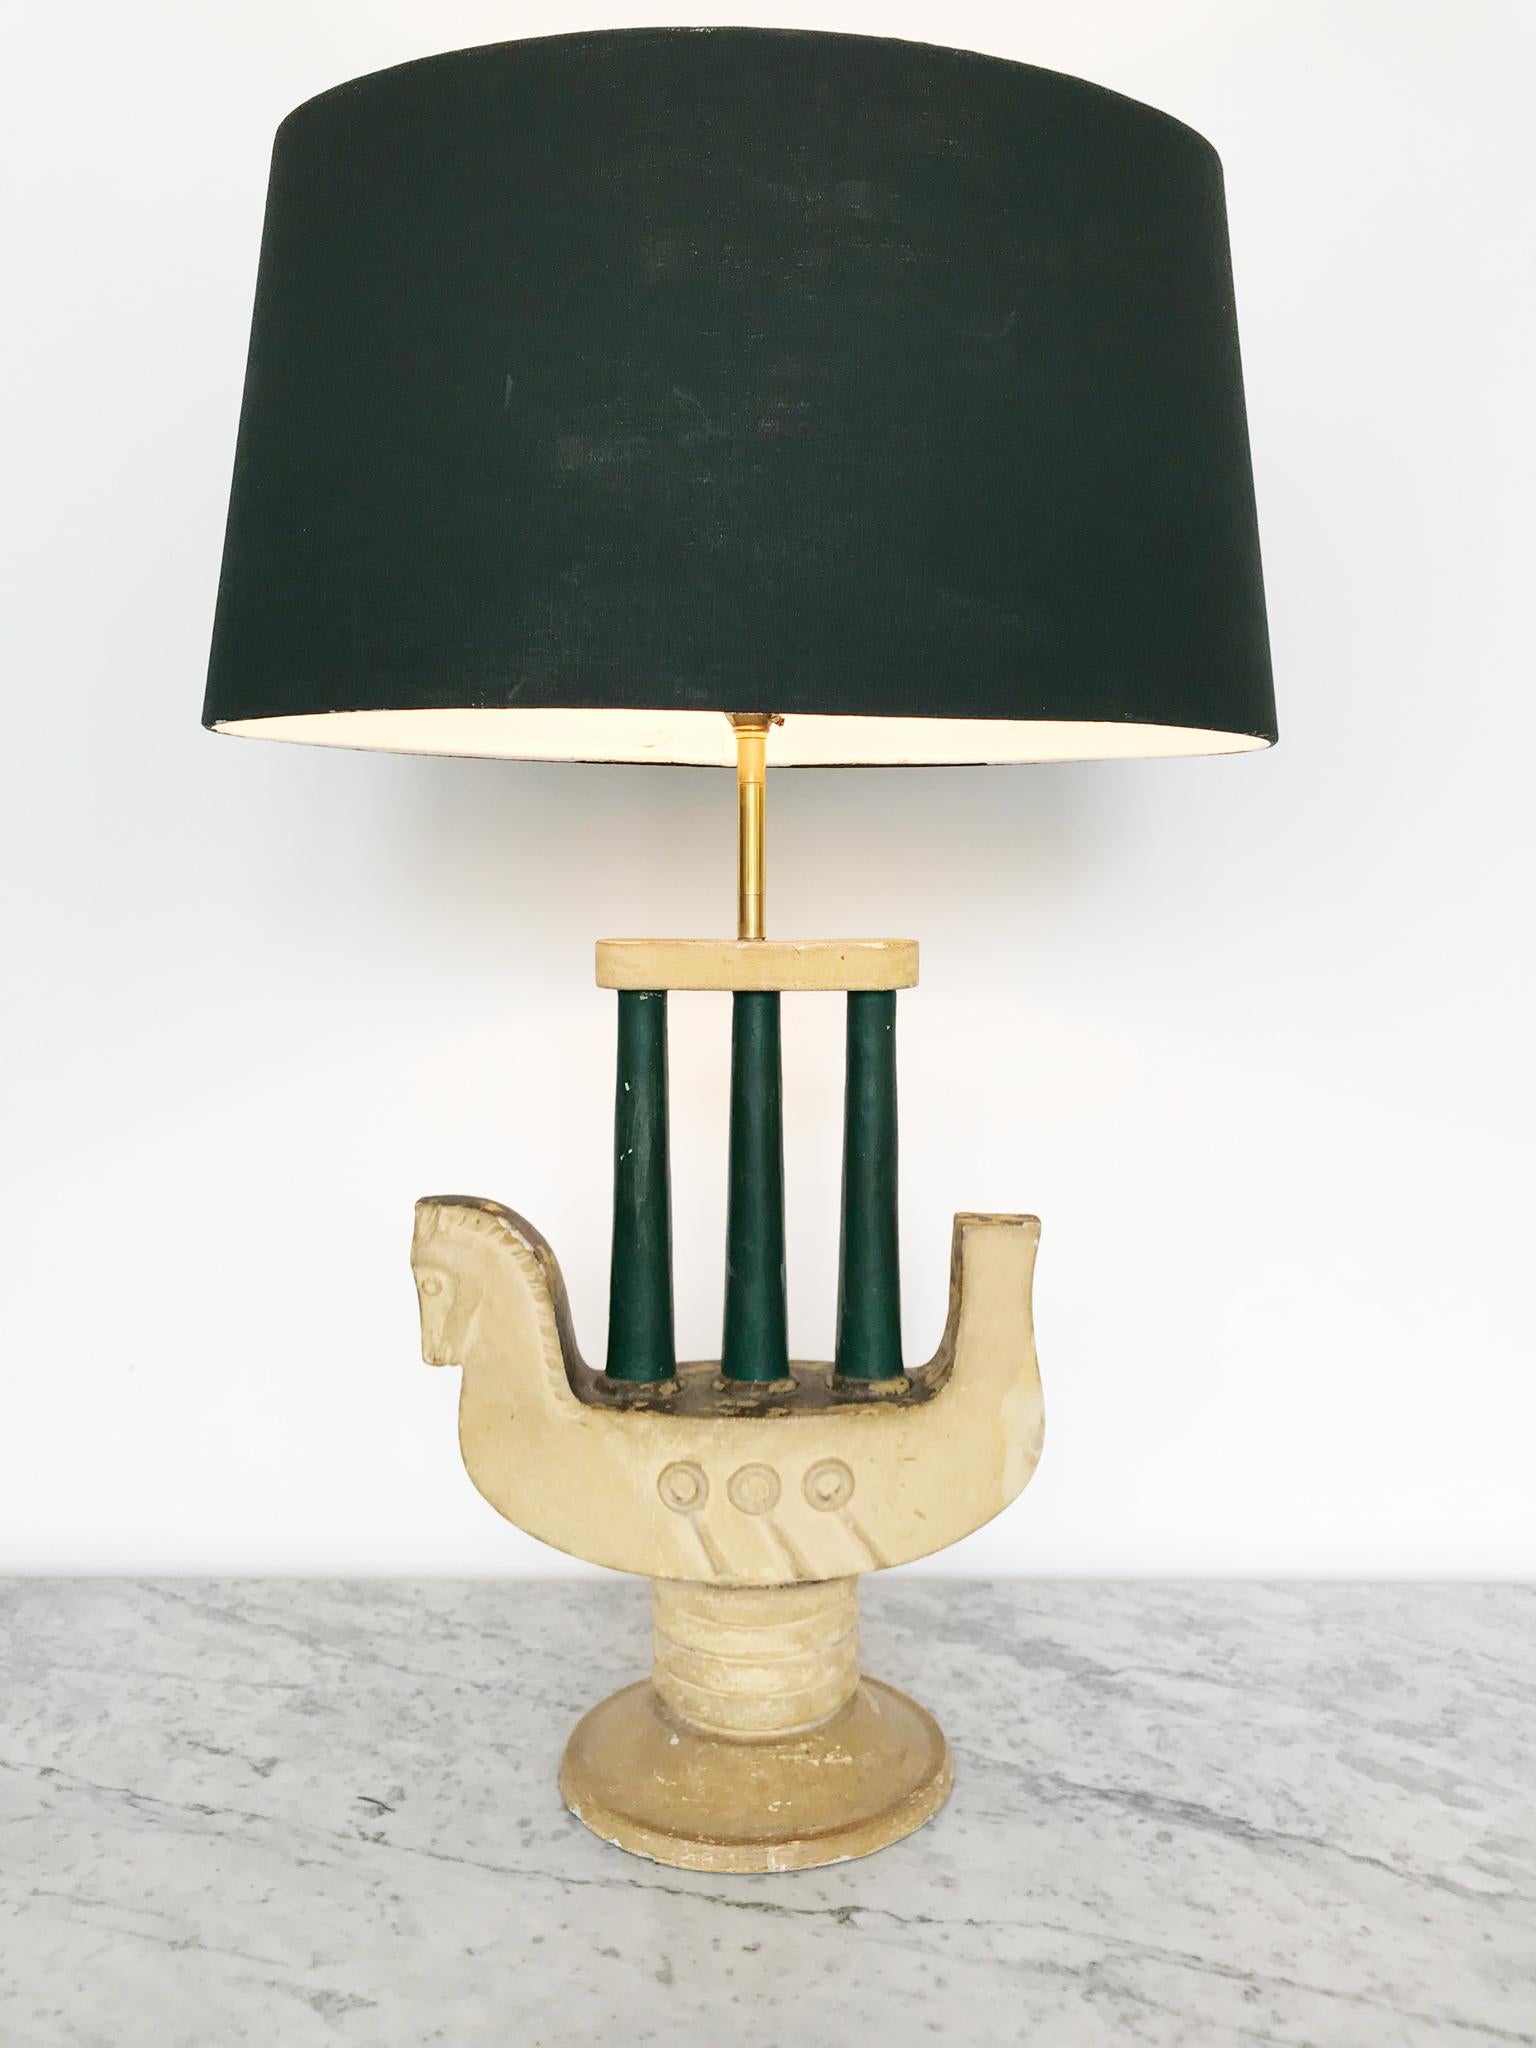 Grand Tour VENETIAN PLASTER LAMP Modelled as a Horse, 1940s